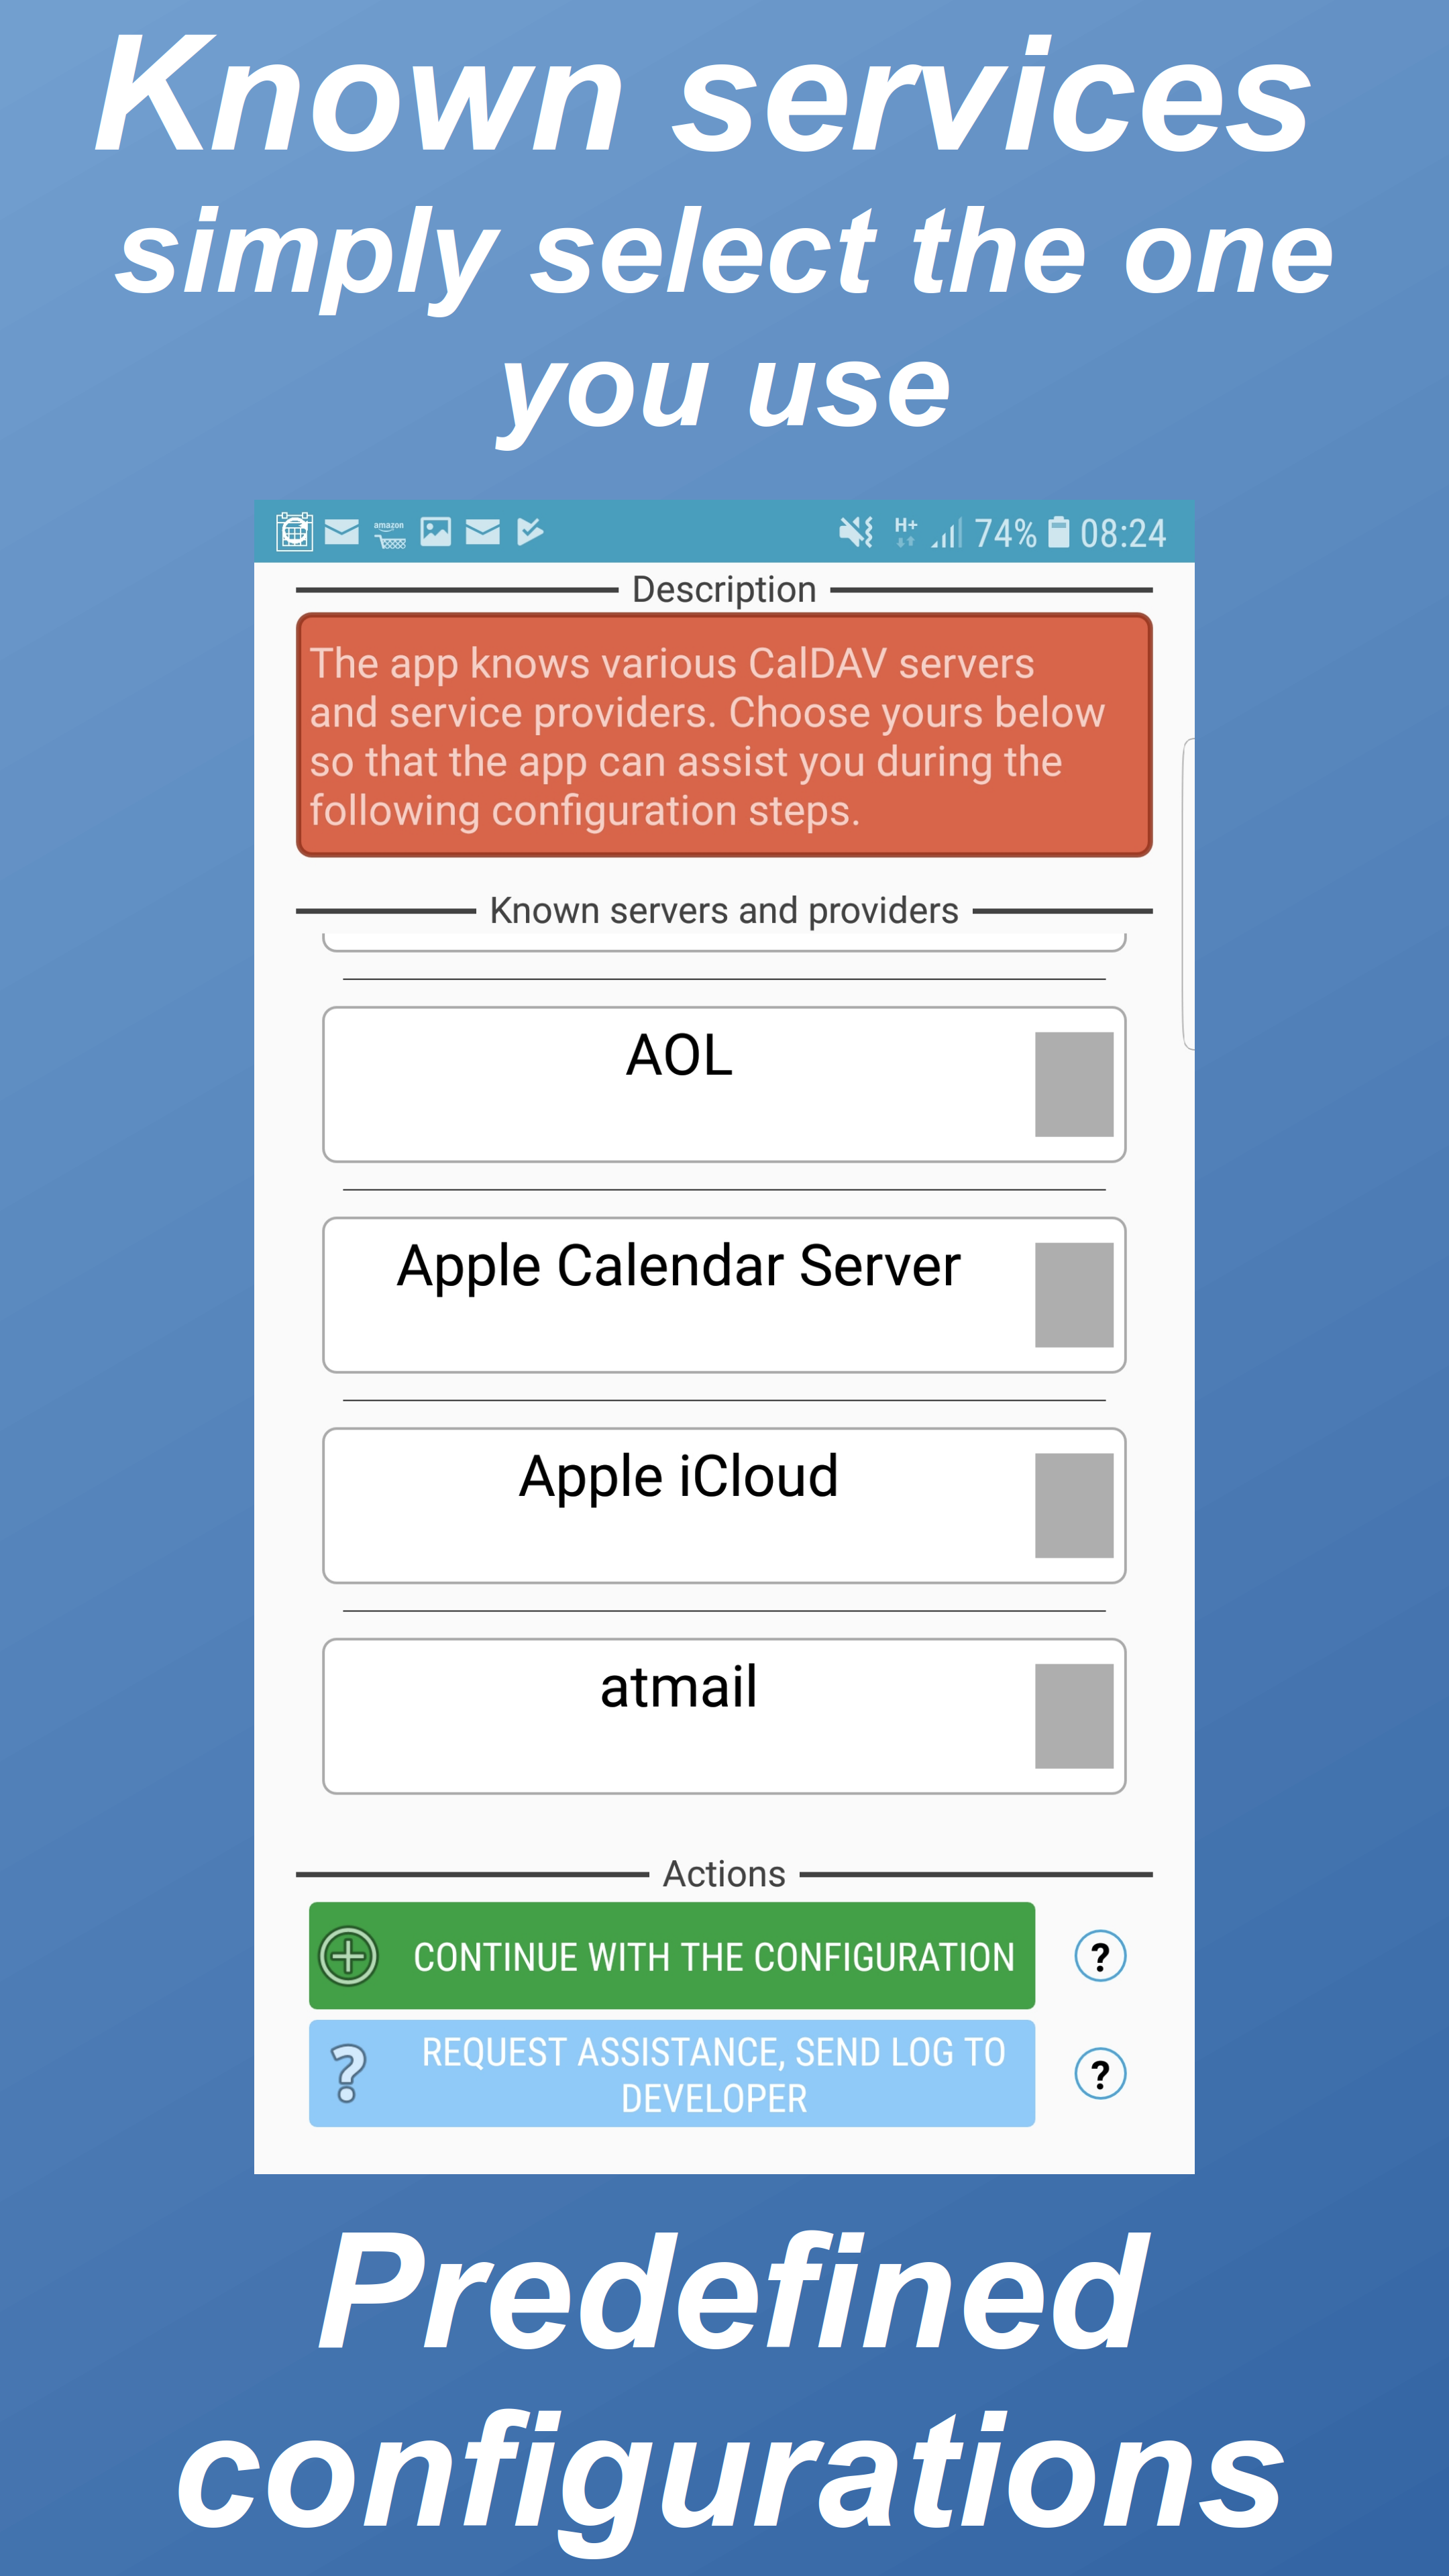 Android application CalendarSync - CalDAV and more screenshort